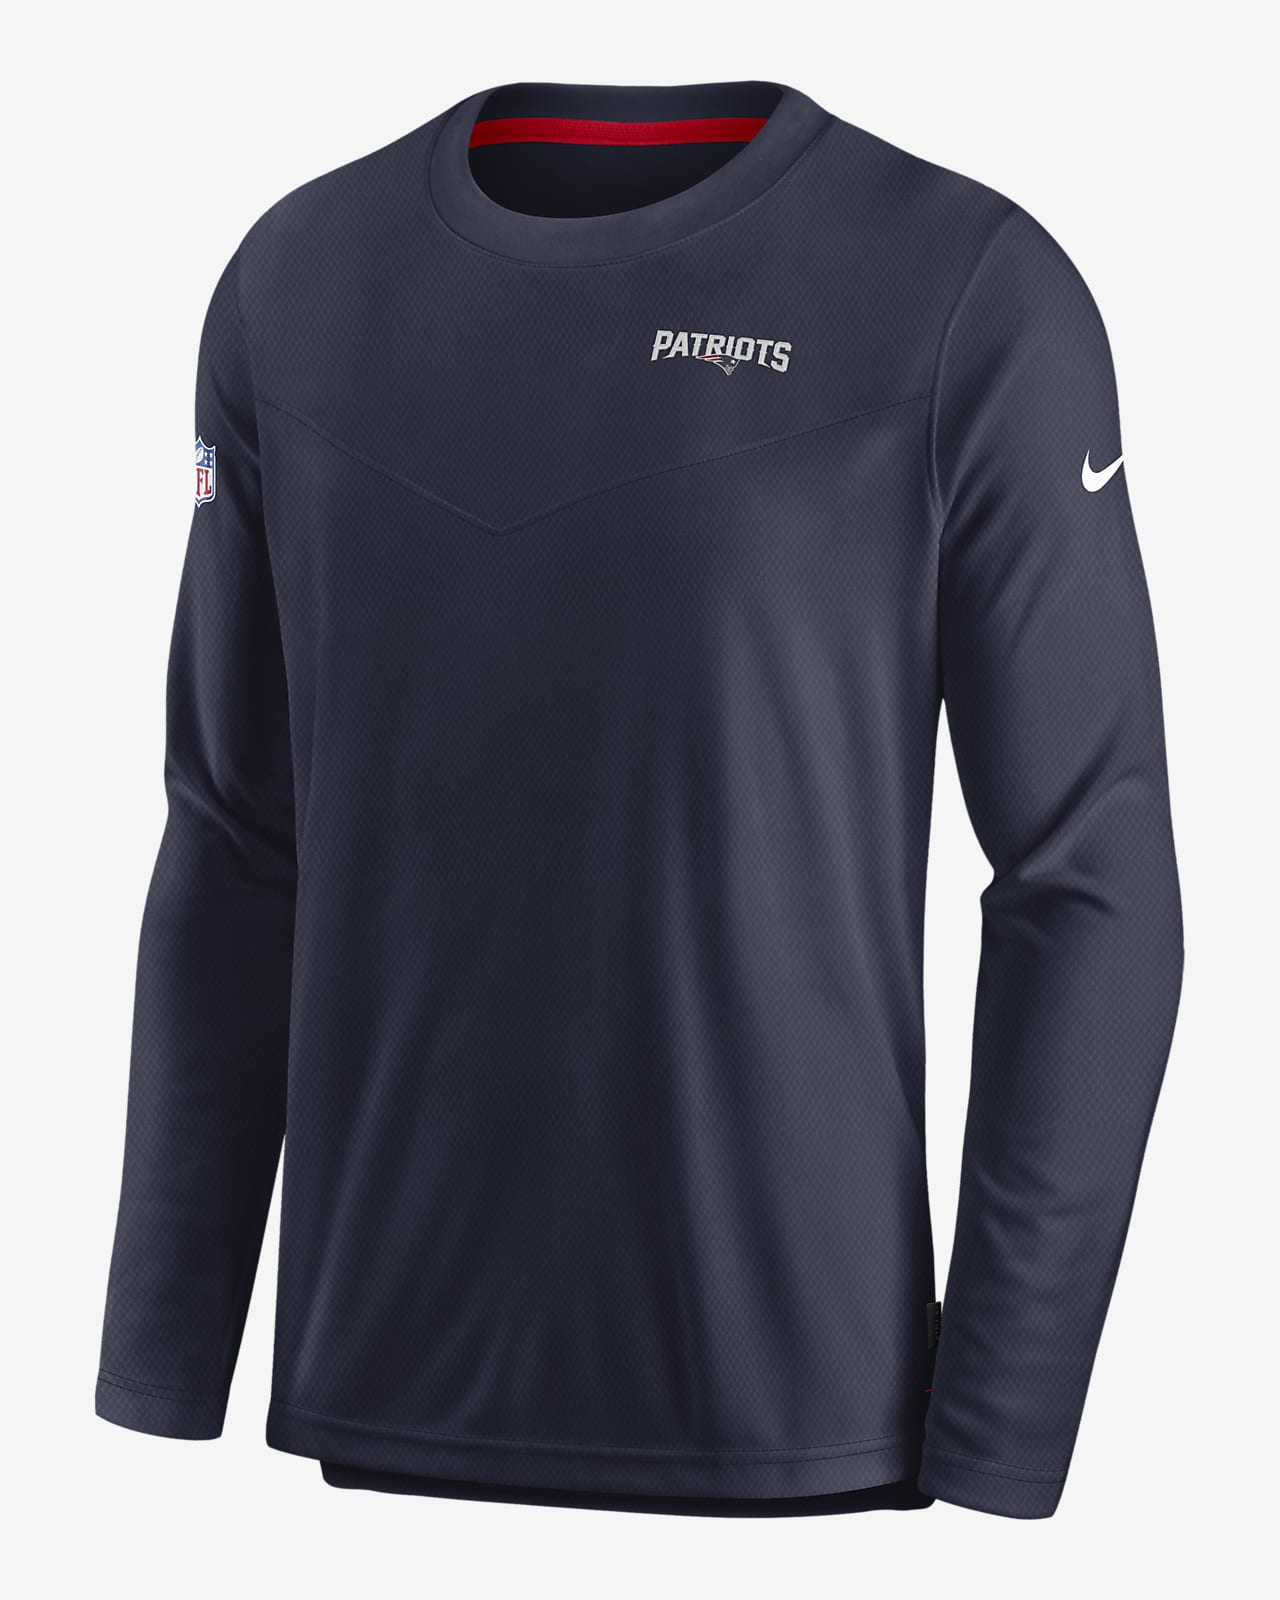 Nike Dri-FIT Lockup (NFL New England Patriots) Men's Long-Sleeve Top